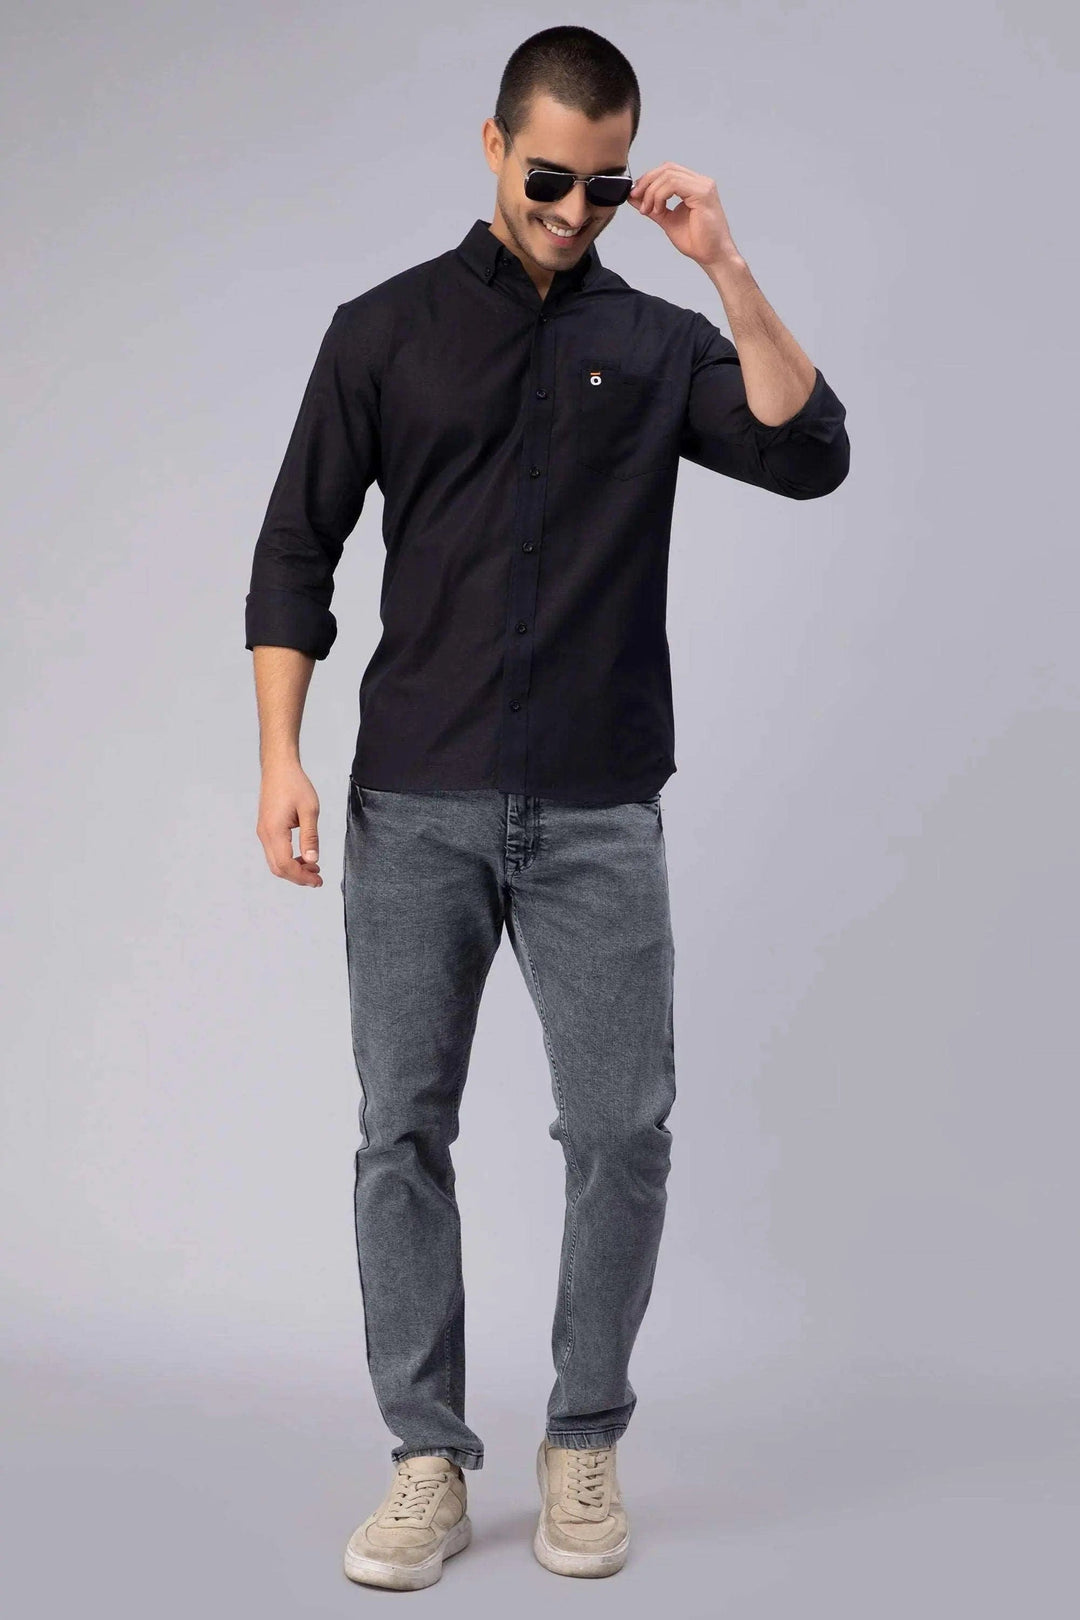 Ankle Fit Shady Grey Denim Jeans For Men - Peplos Jeans 